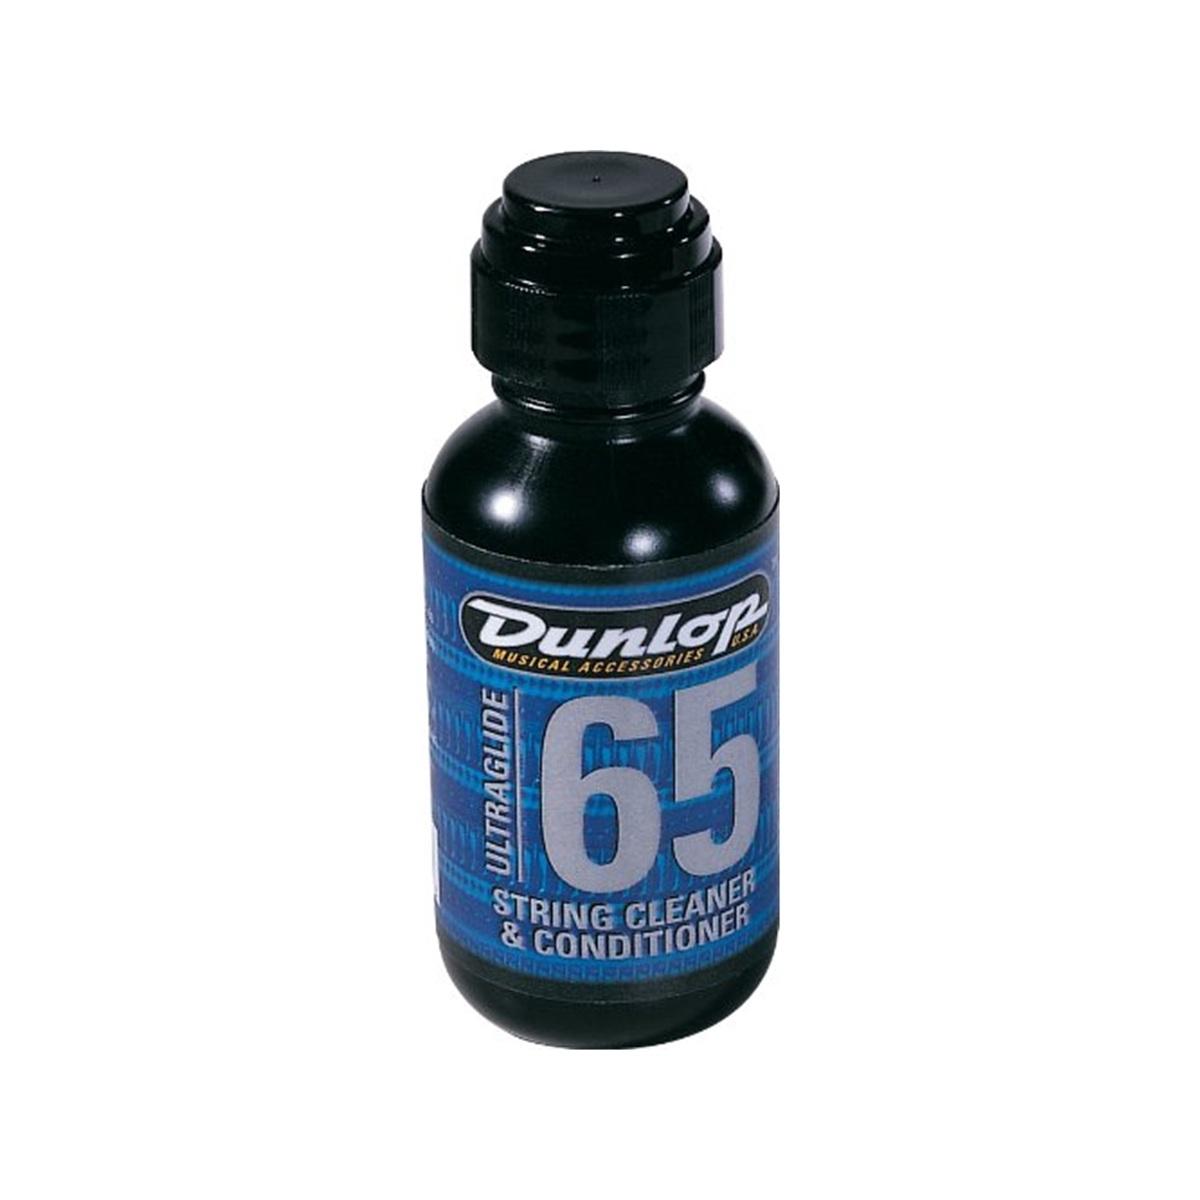 Dunlop 6582 ultraglide 65 string cleaner & conditioner detergente per corde